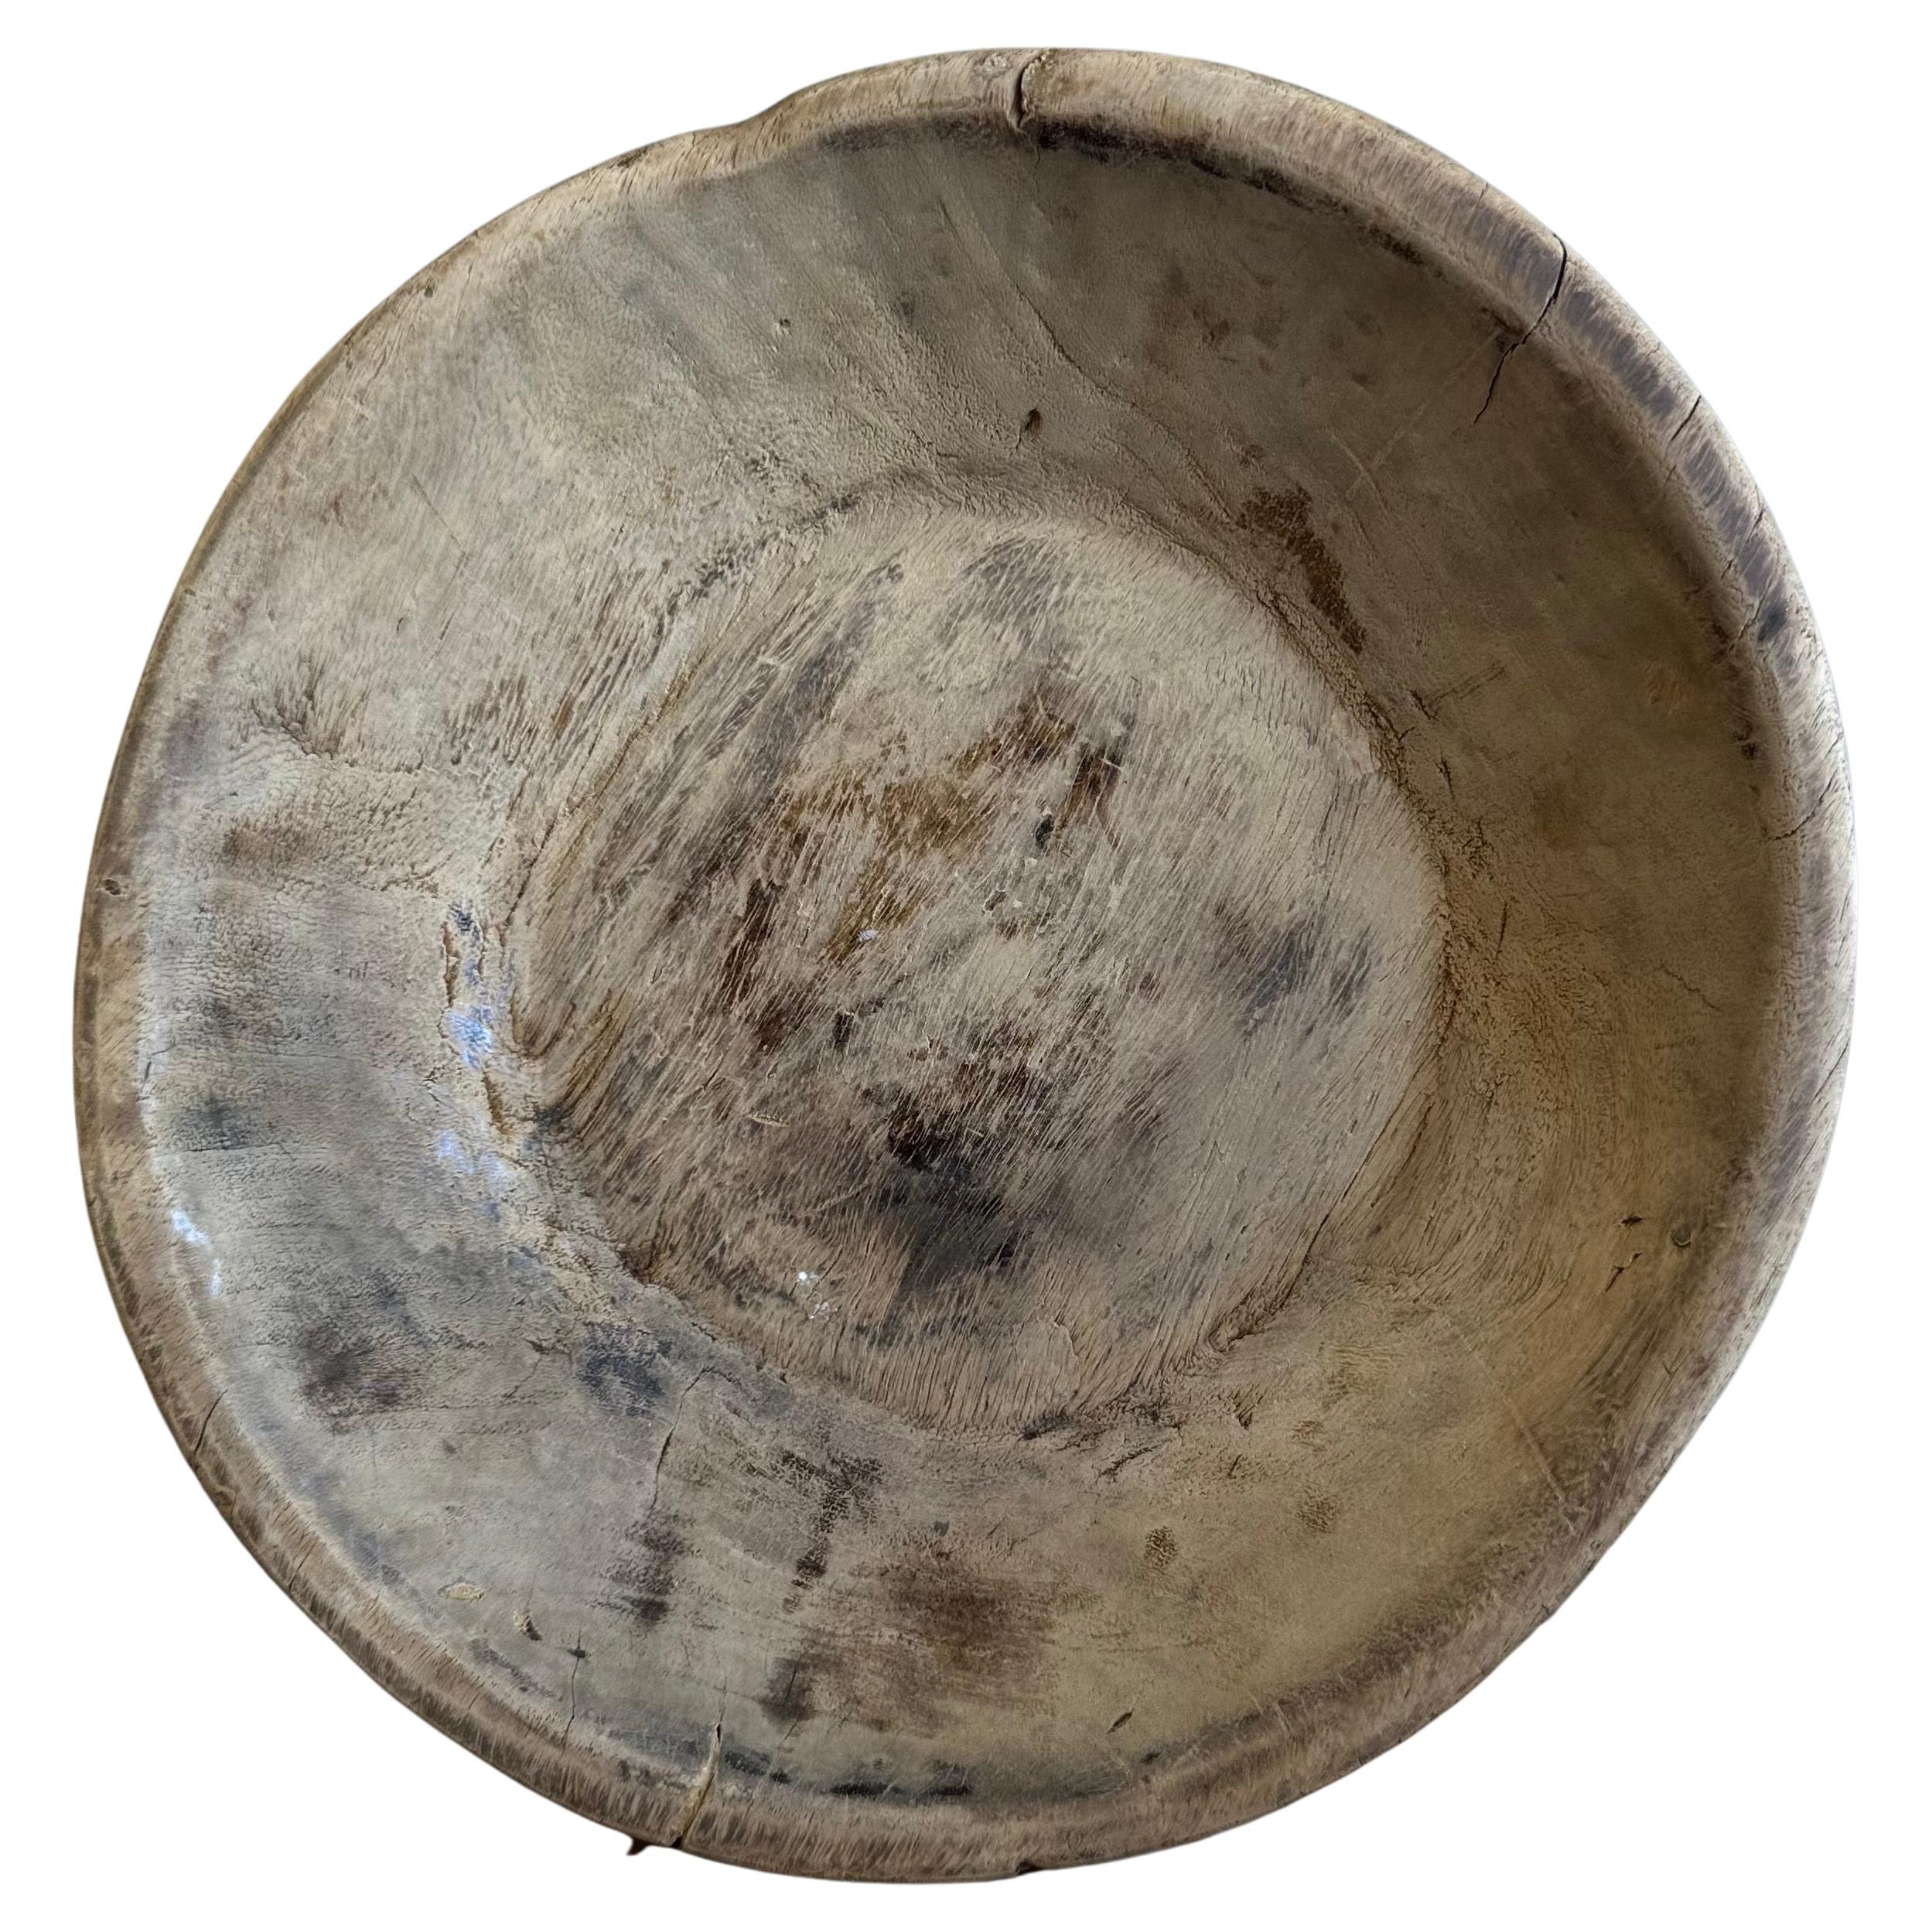 Vintage Decorative Wood Bowl